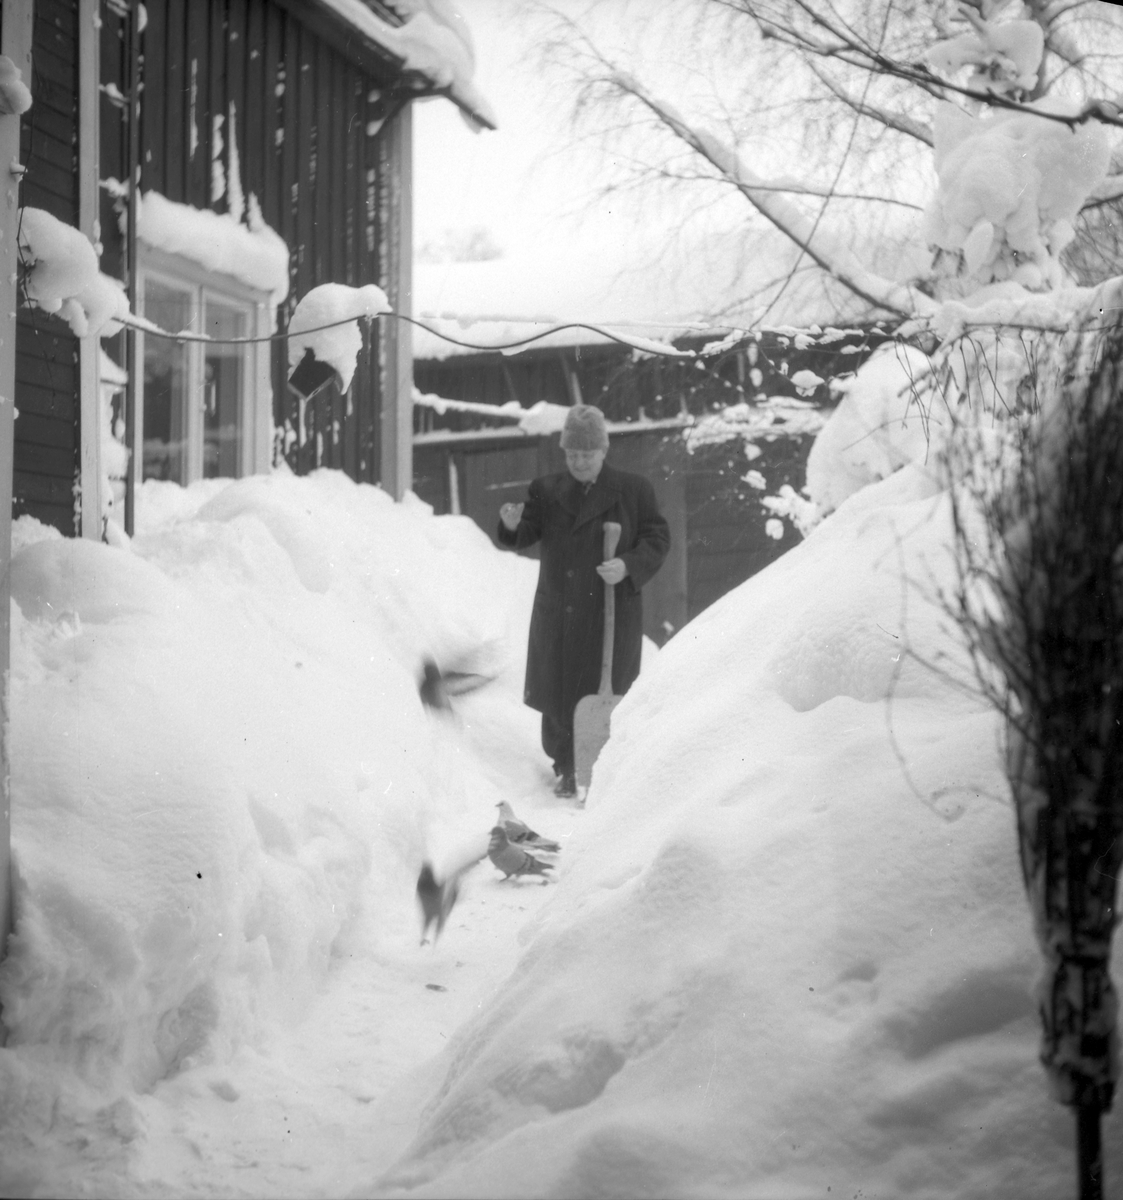 Snösvängen i Gävle

